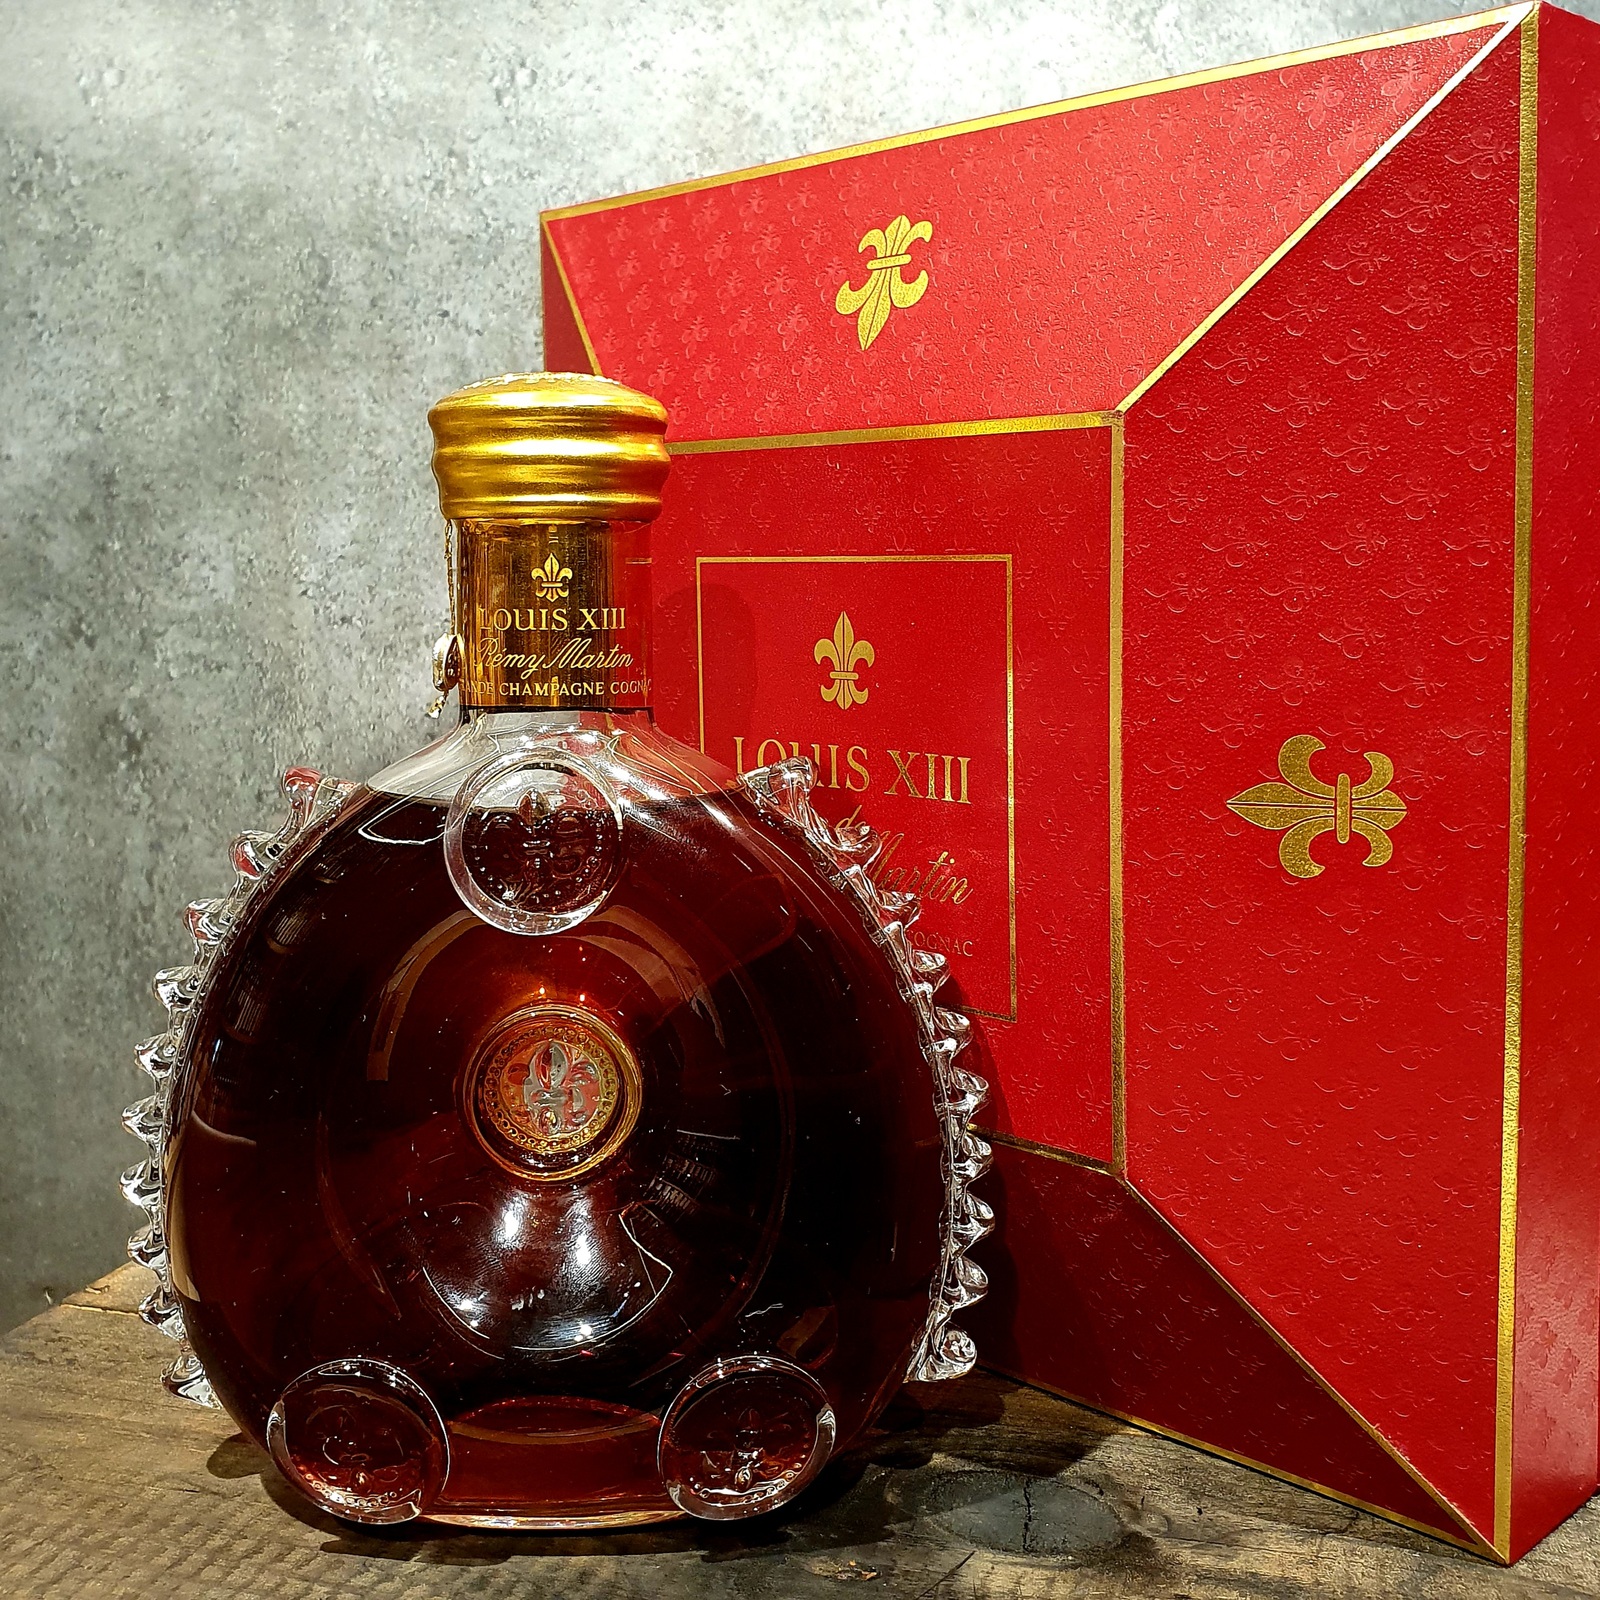 Louis XIII de Remy Martin Grande Champagne Cognac Cognac